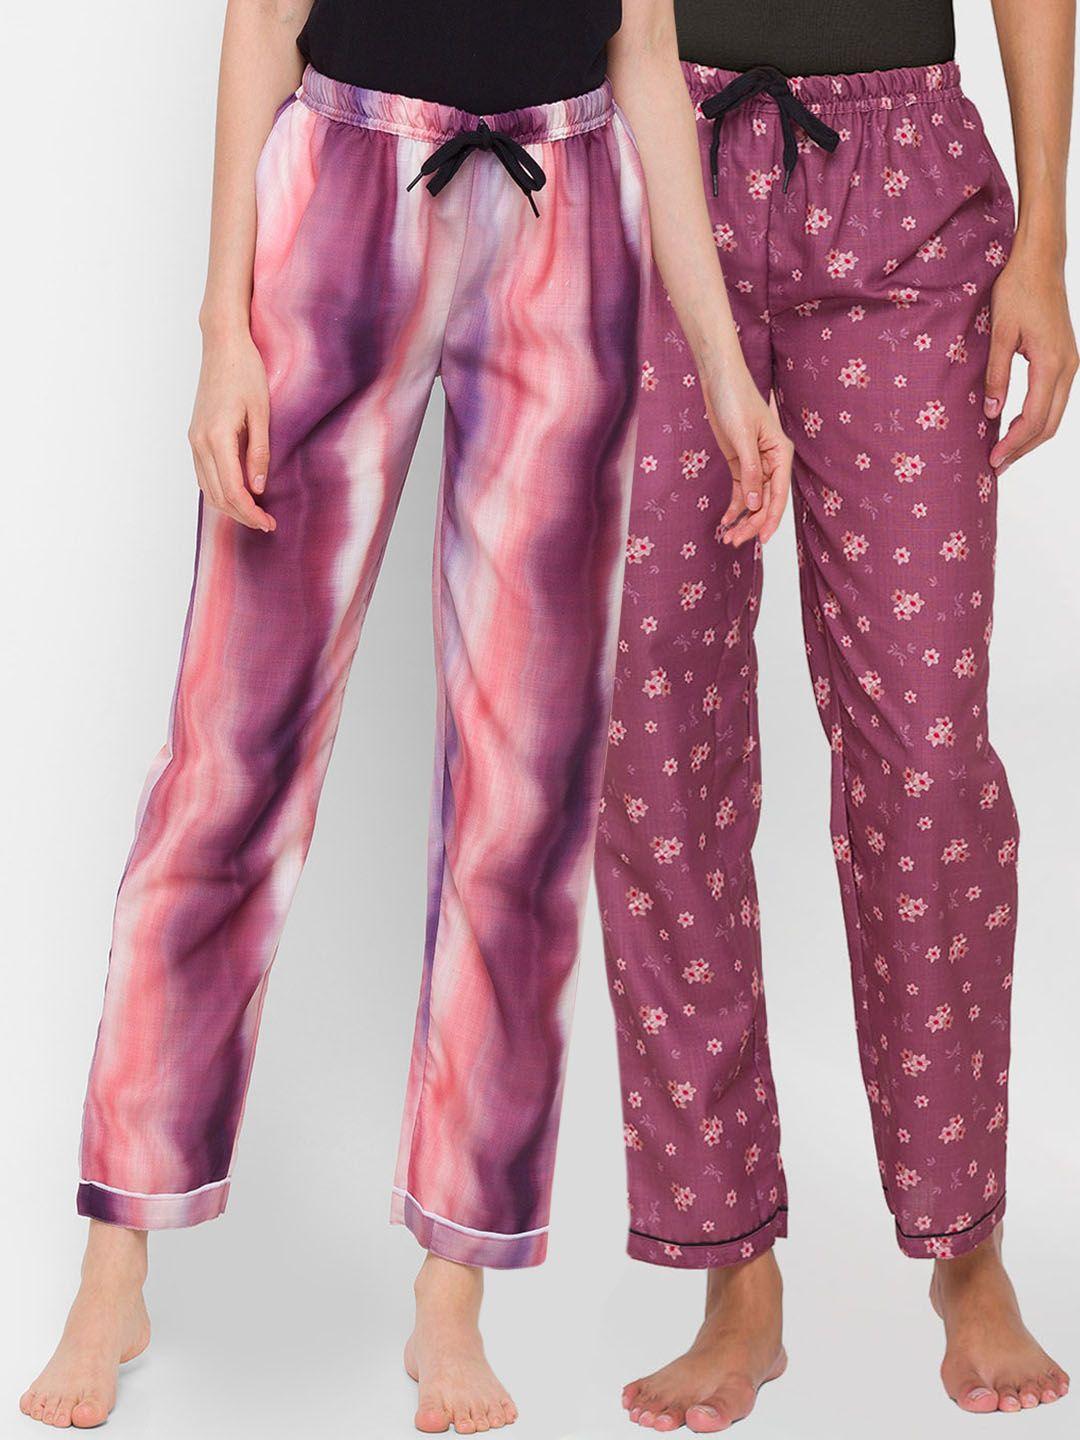 fashionrack women purple pack of 2 cotton lounge pants